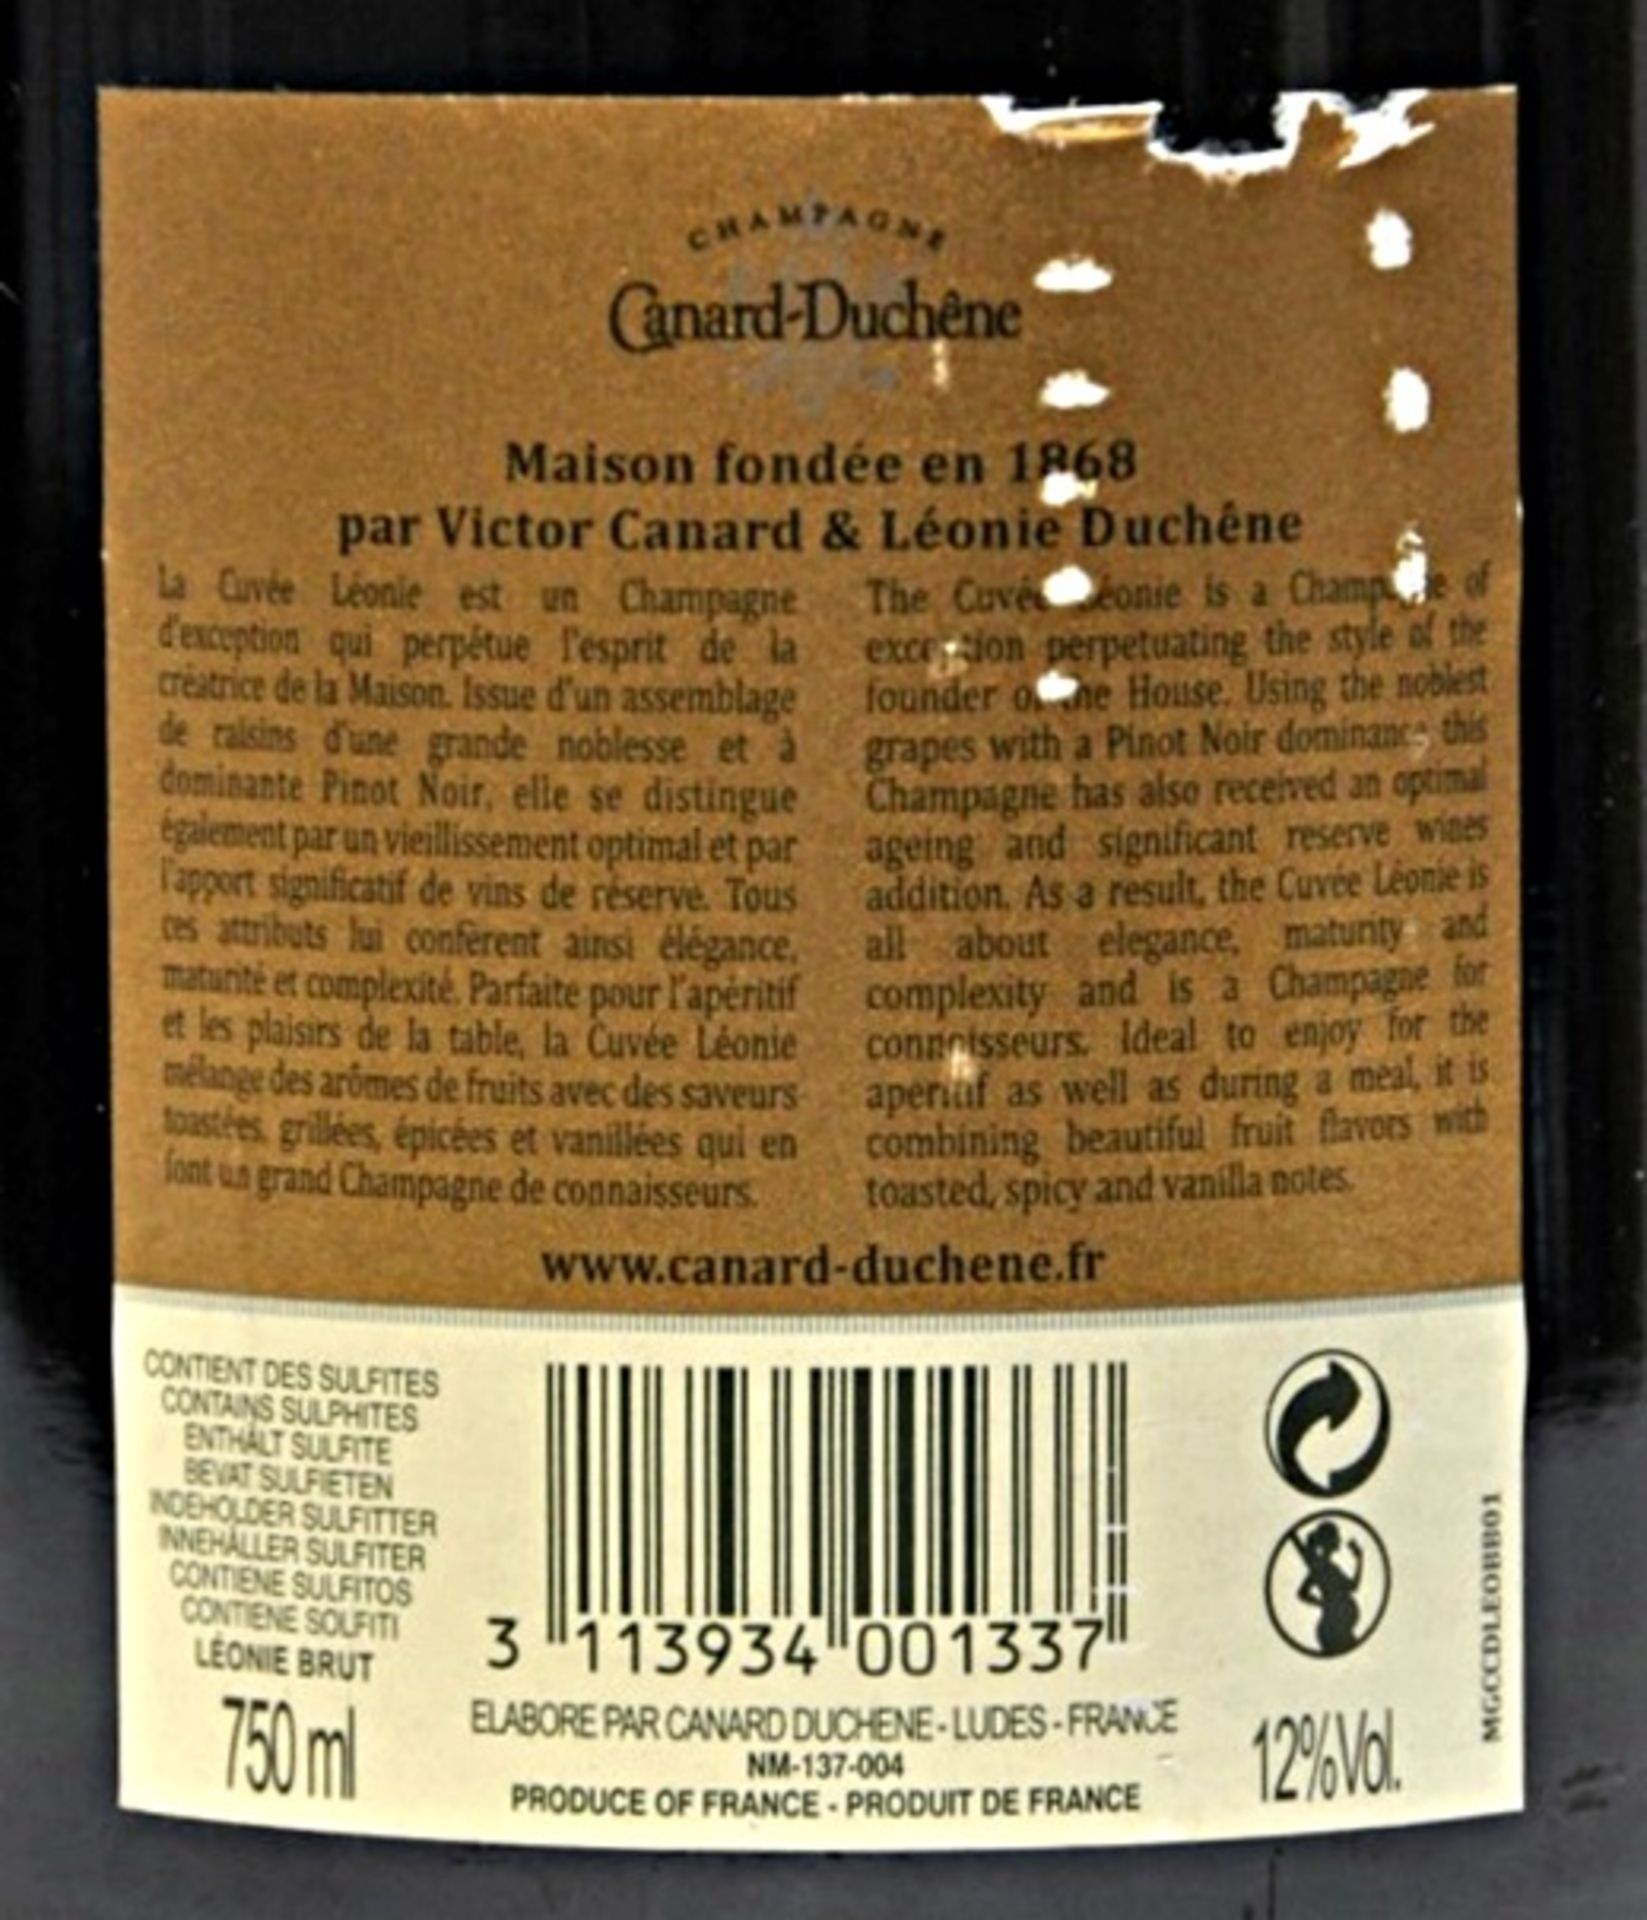 1 x Canard-Duchene Cuvee Leonie Brut, Champagne, France – NV - Bottle Size 75cl – Volume 12% - Ref - Image 5 of 5